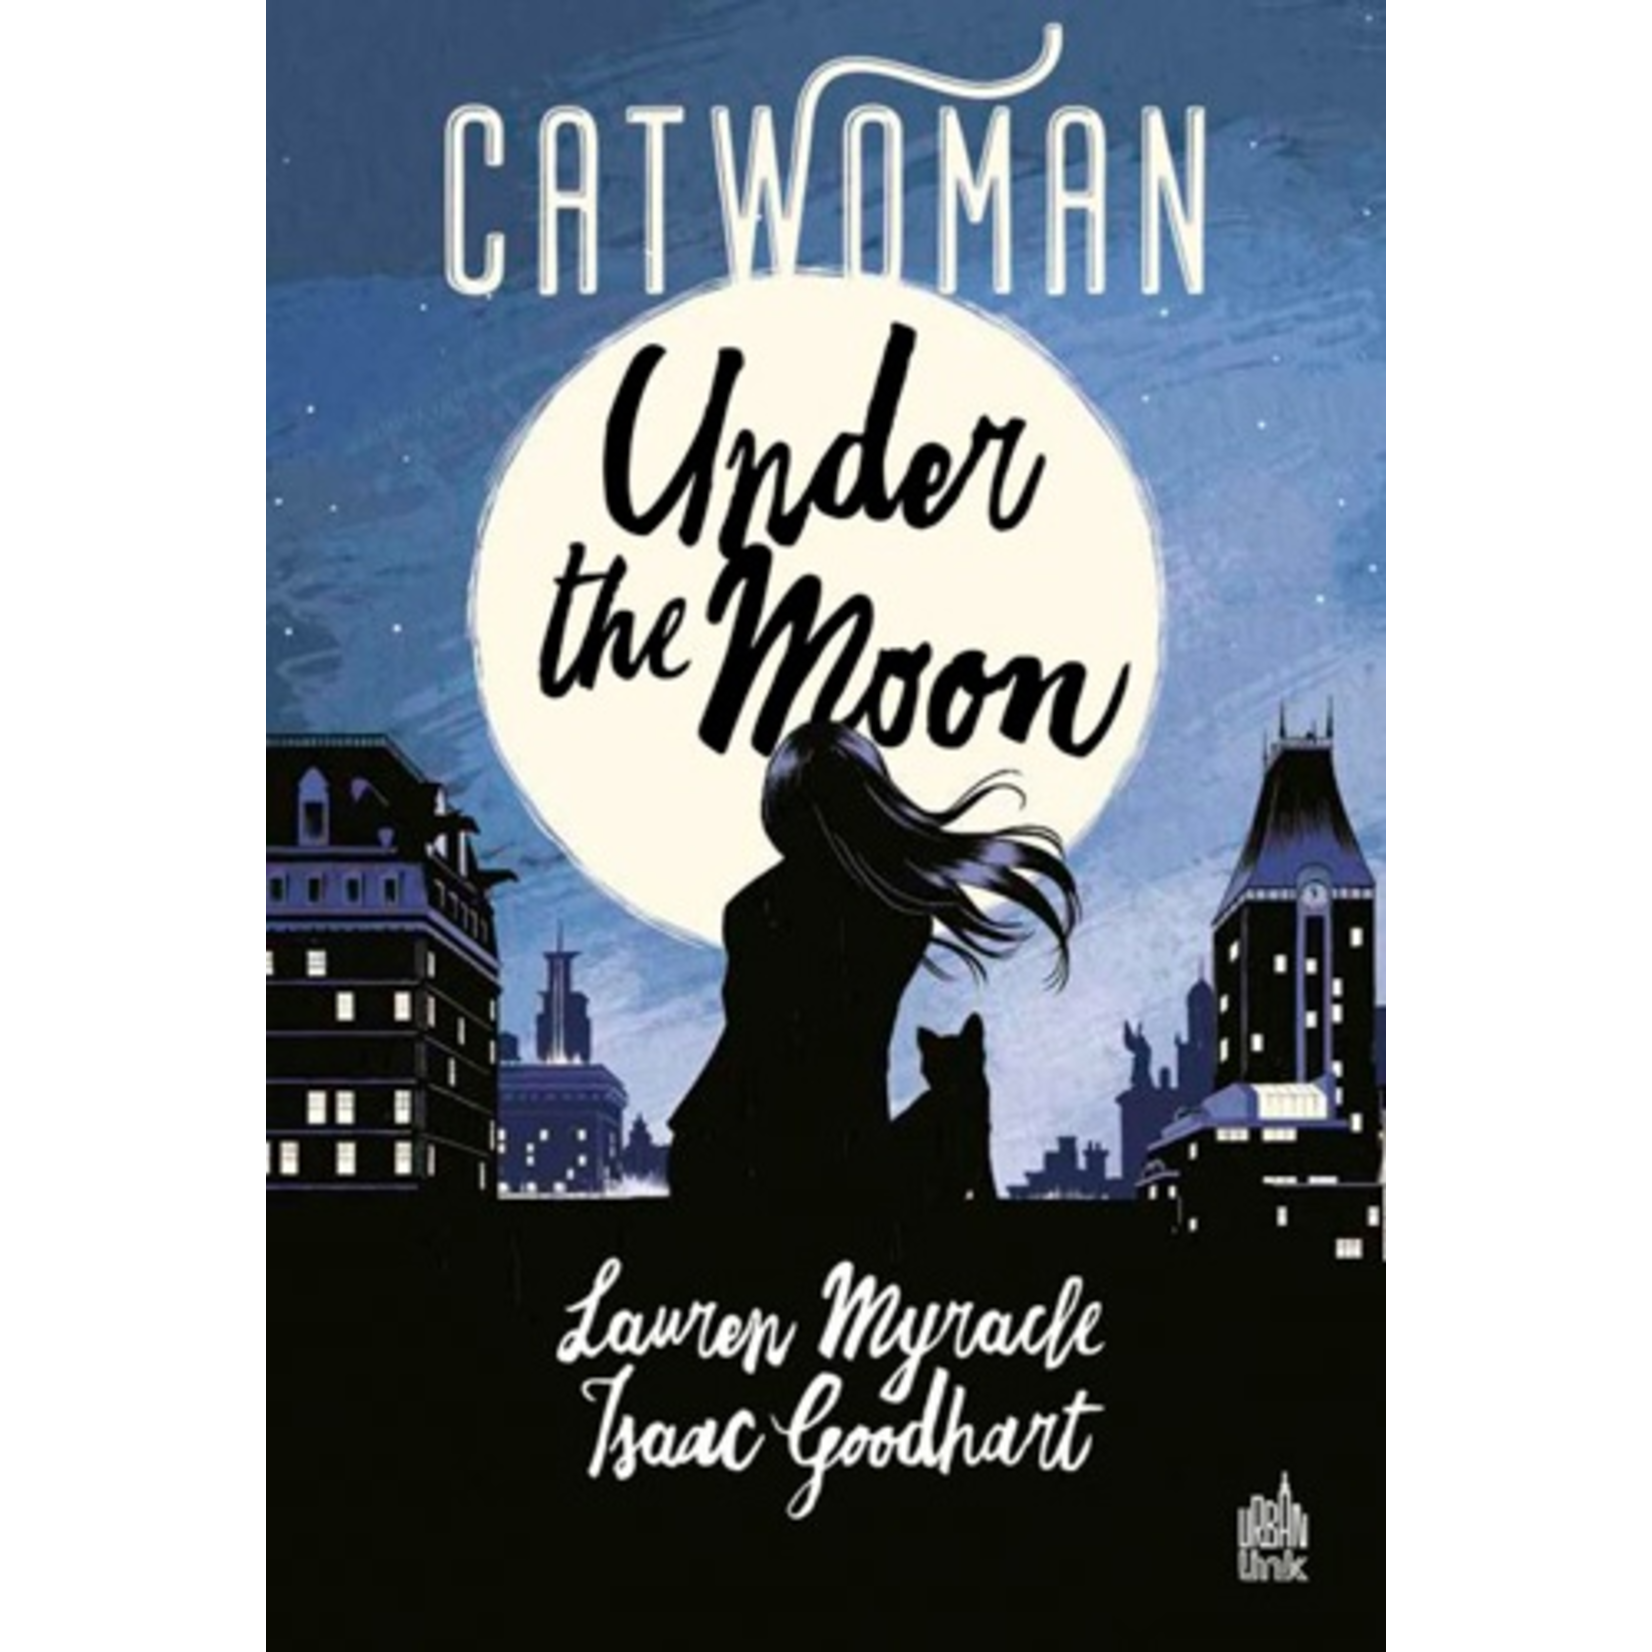 Urban Comics Catwoman : Under the moon